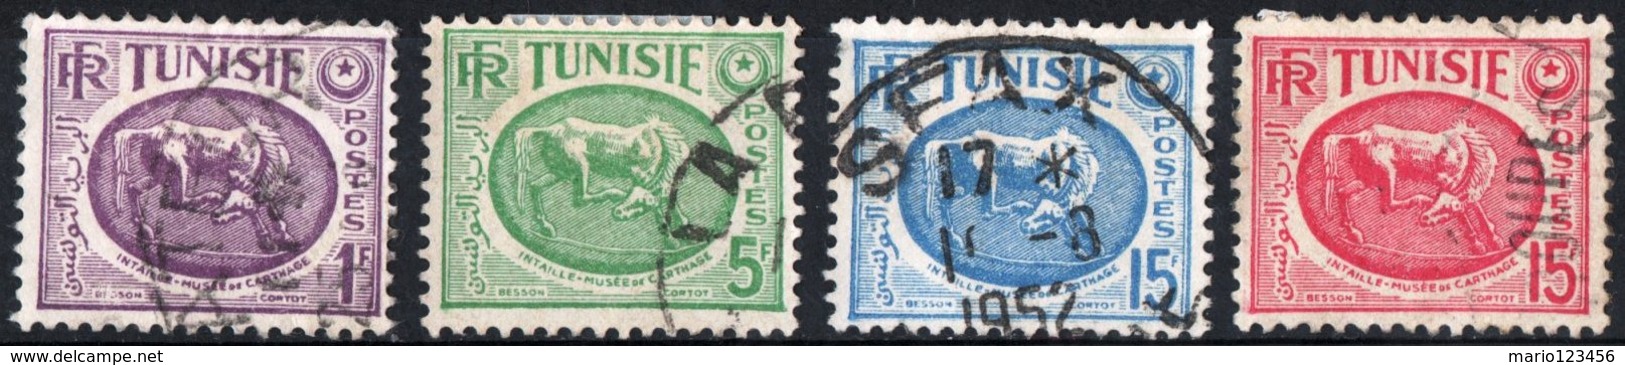 TUNISIA, MUSEI, CARTAGINE, 1950-1951, FRANCOBOLLI USATI,  YT 339,342,344,345   Scott 215,218,221,222 - Usati